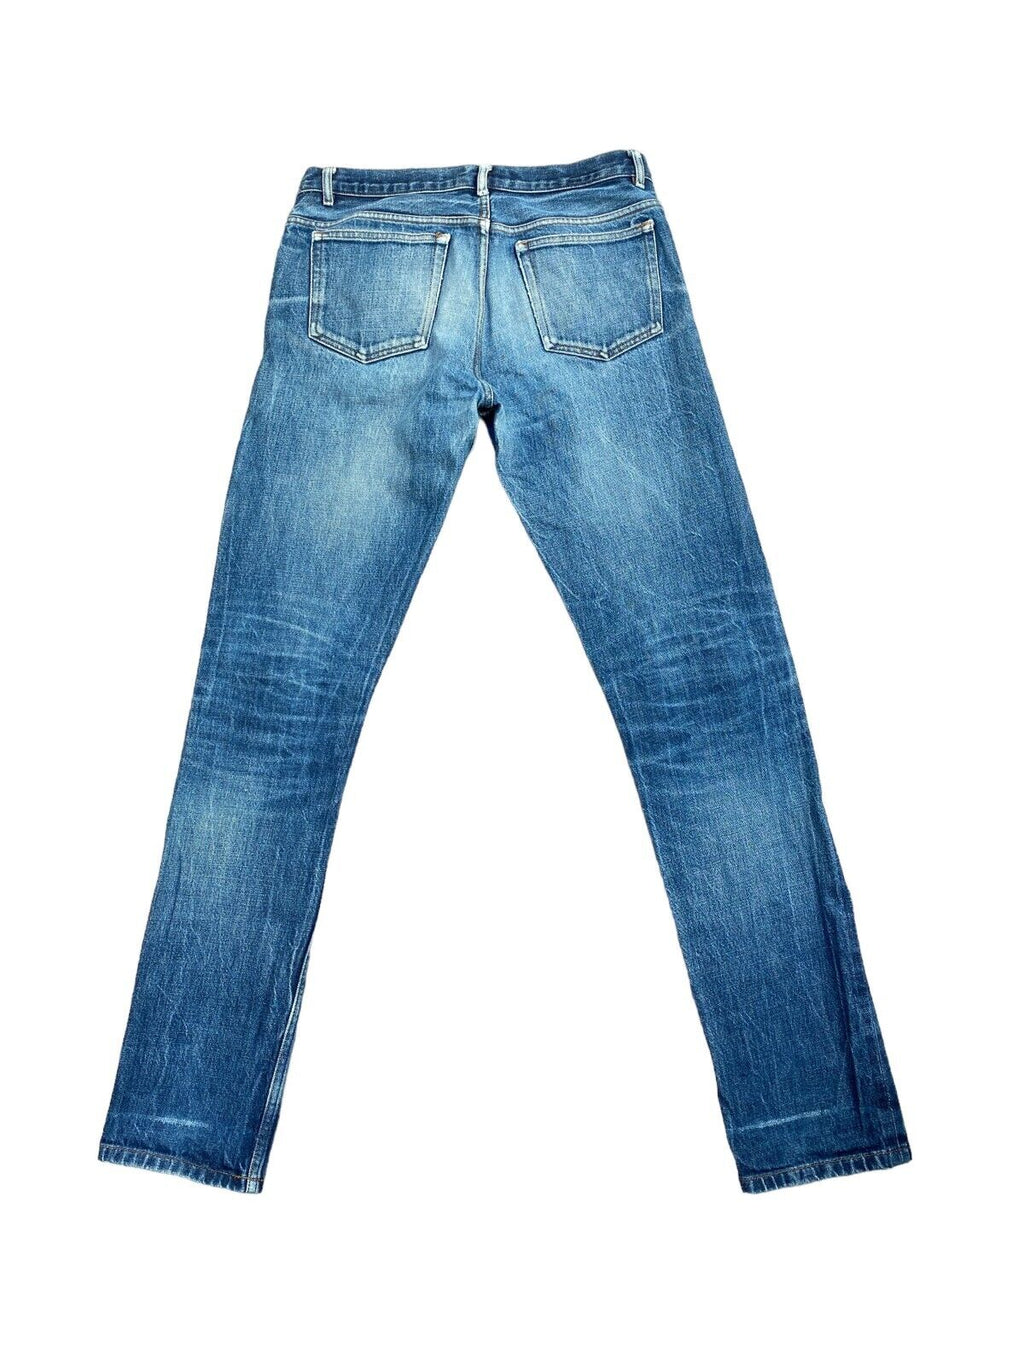 Butler Petit Standard Blue Denim Jeans  Size 30 APC